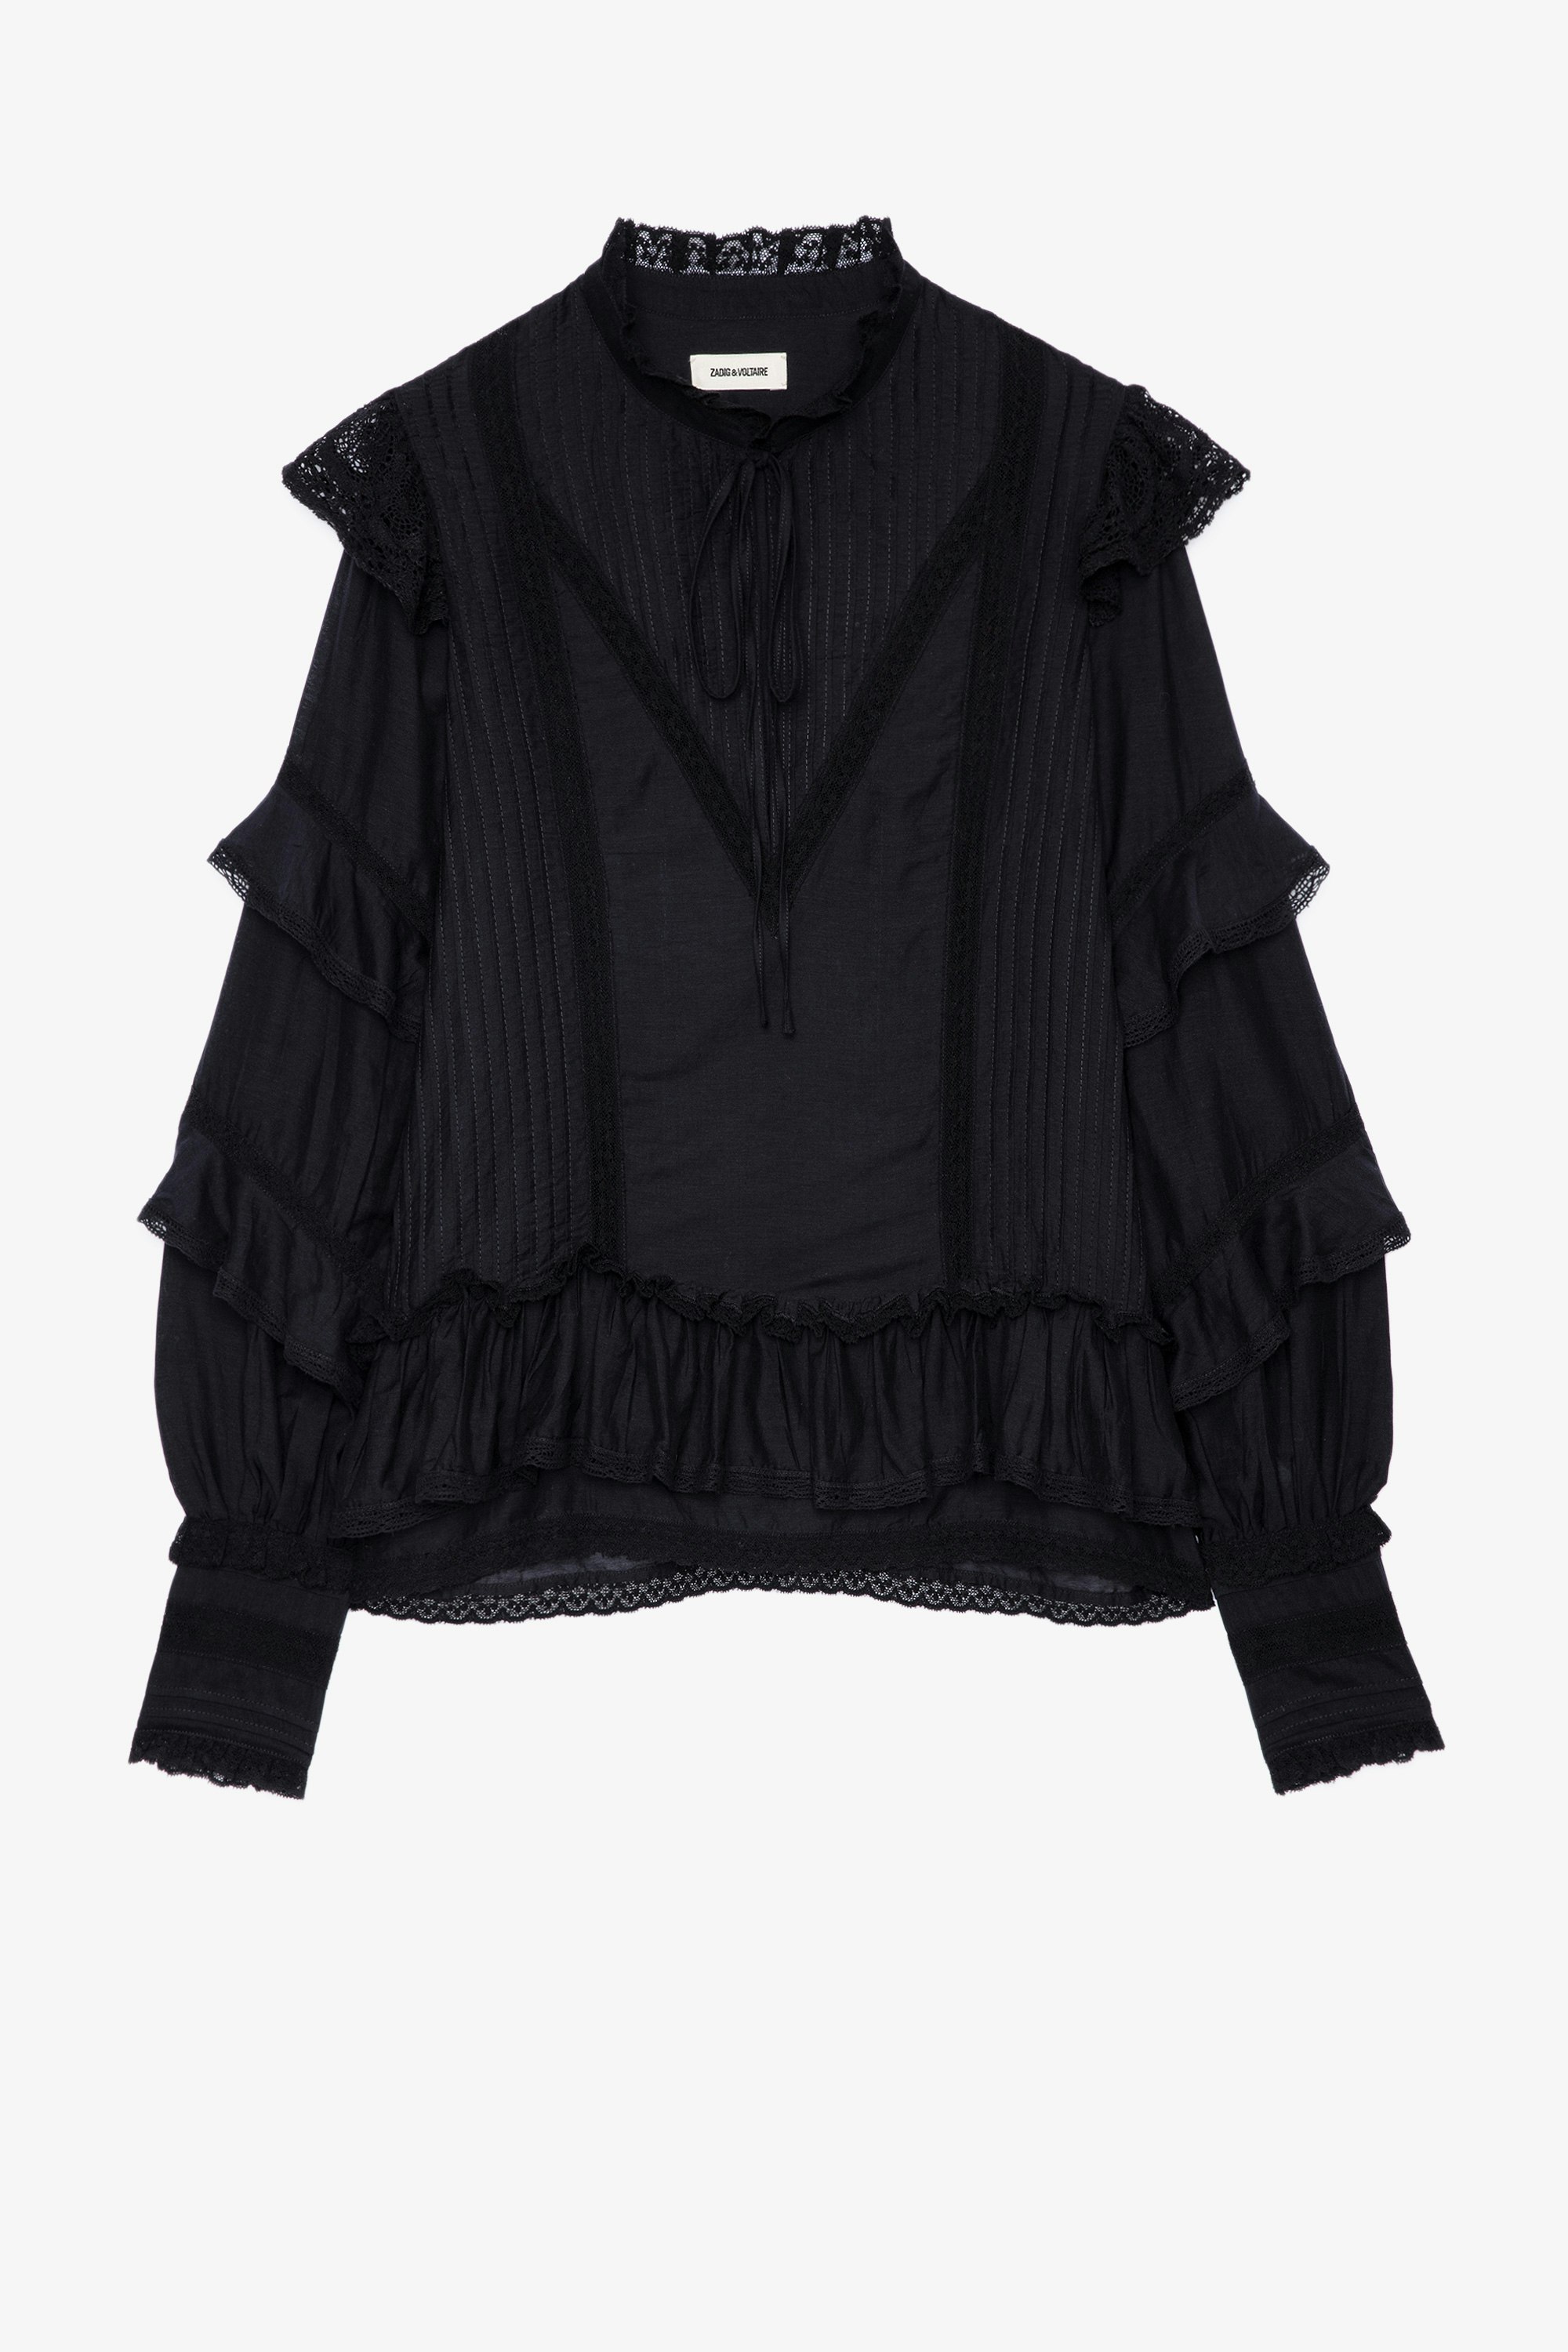 Trinity Blouse Women's black cotton blouse with ruffles